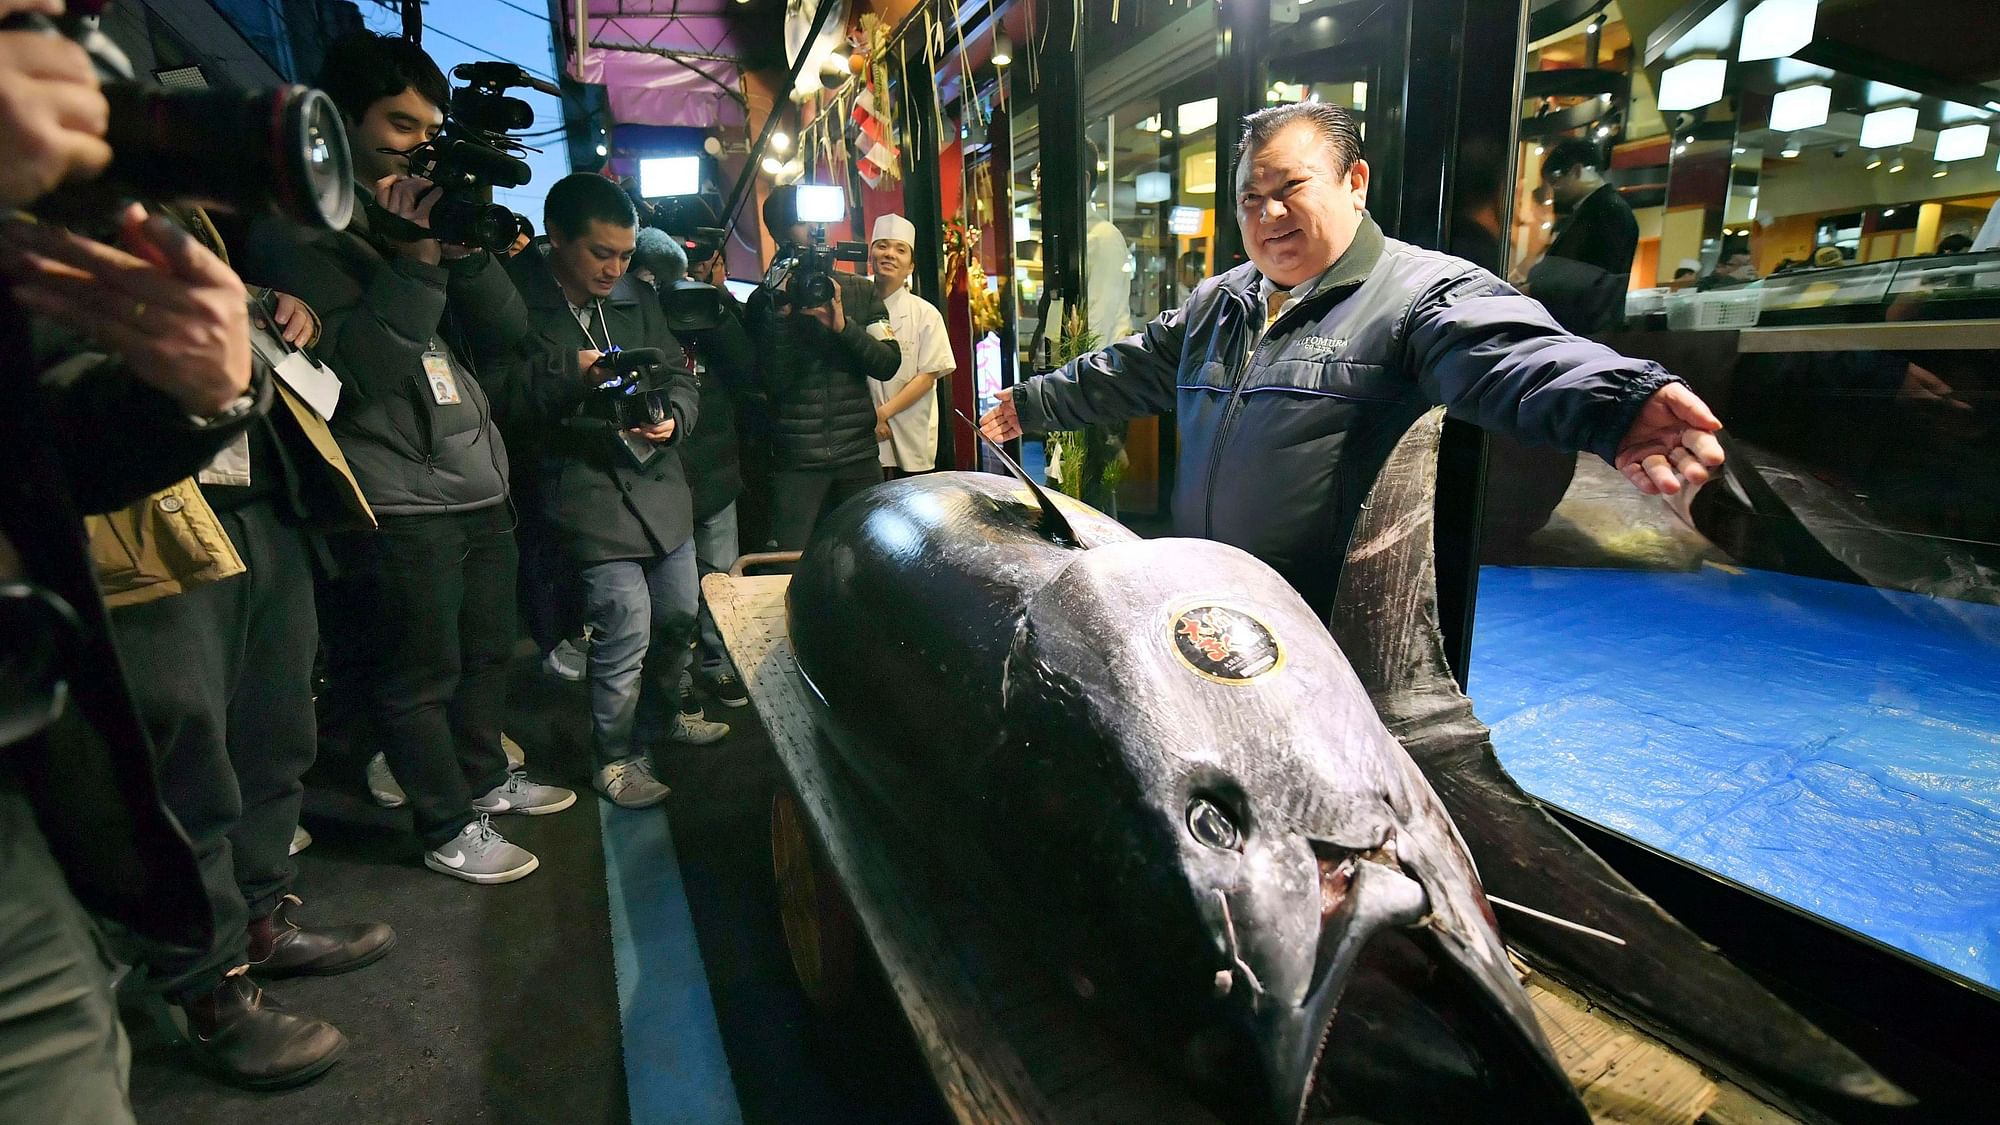 A bluefin tuna fish was sold at an auction in Tokyo’s famed Tsukiji market for 333.6 million yen i.e. three million dollars.